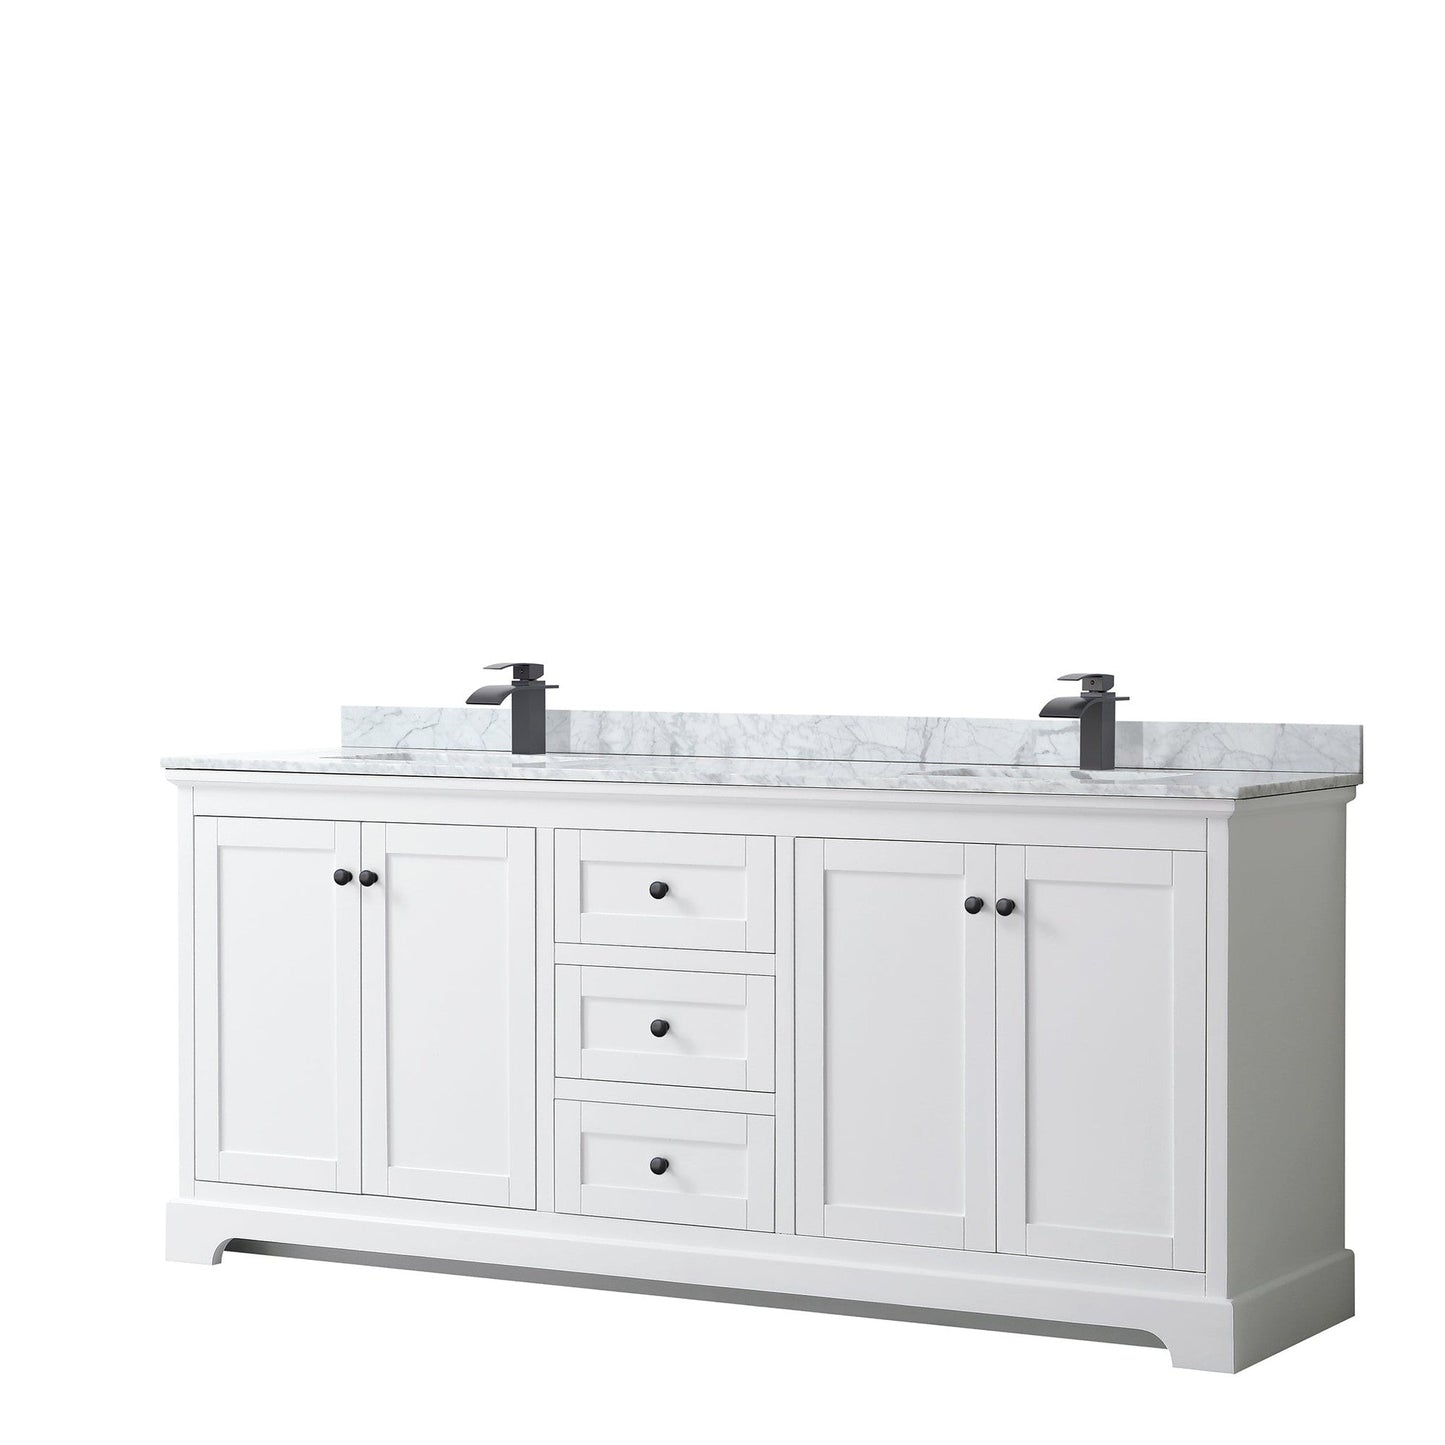 Avery 80" Double Bathroom Vanity in White, White Carrara Marble Countertop, Undermount Square Sinks, Matte Black Trim